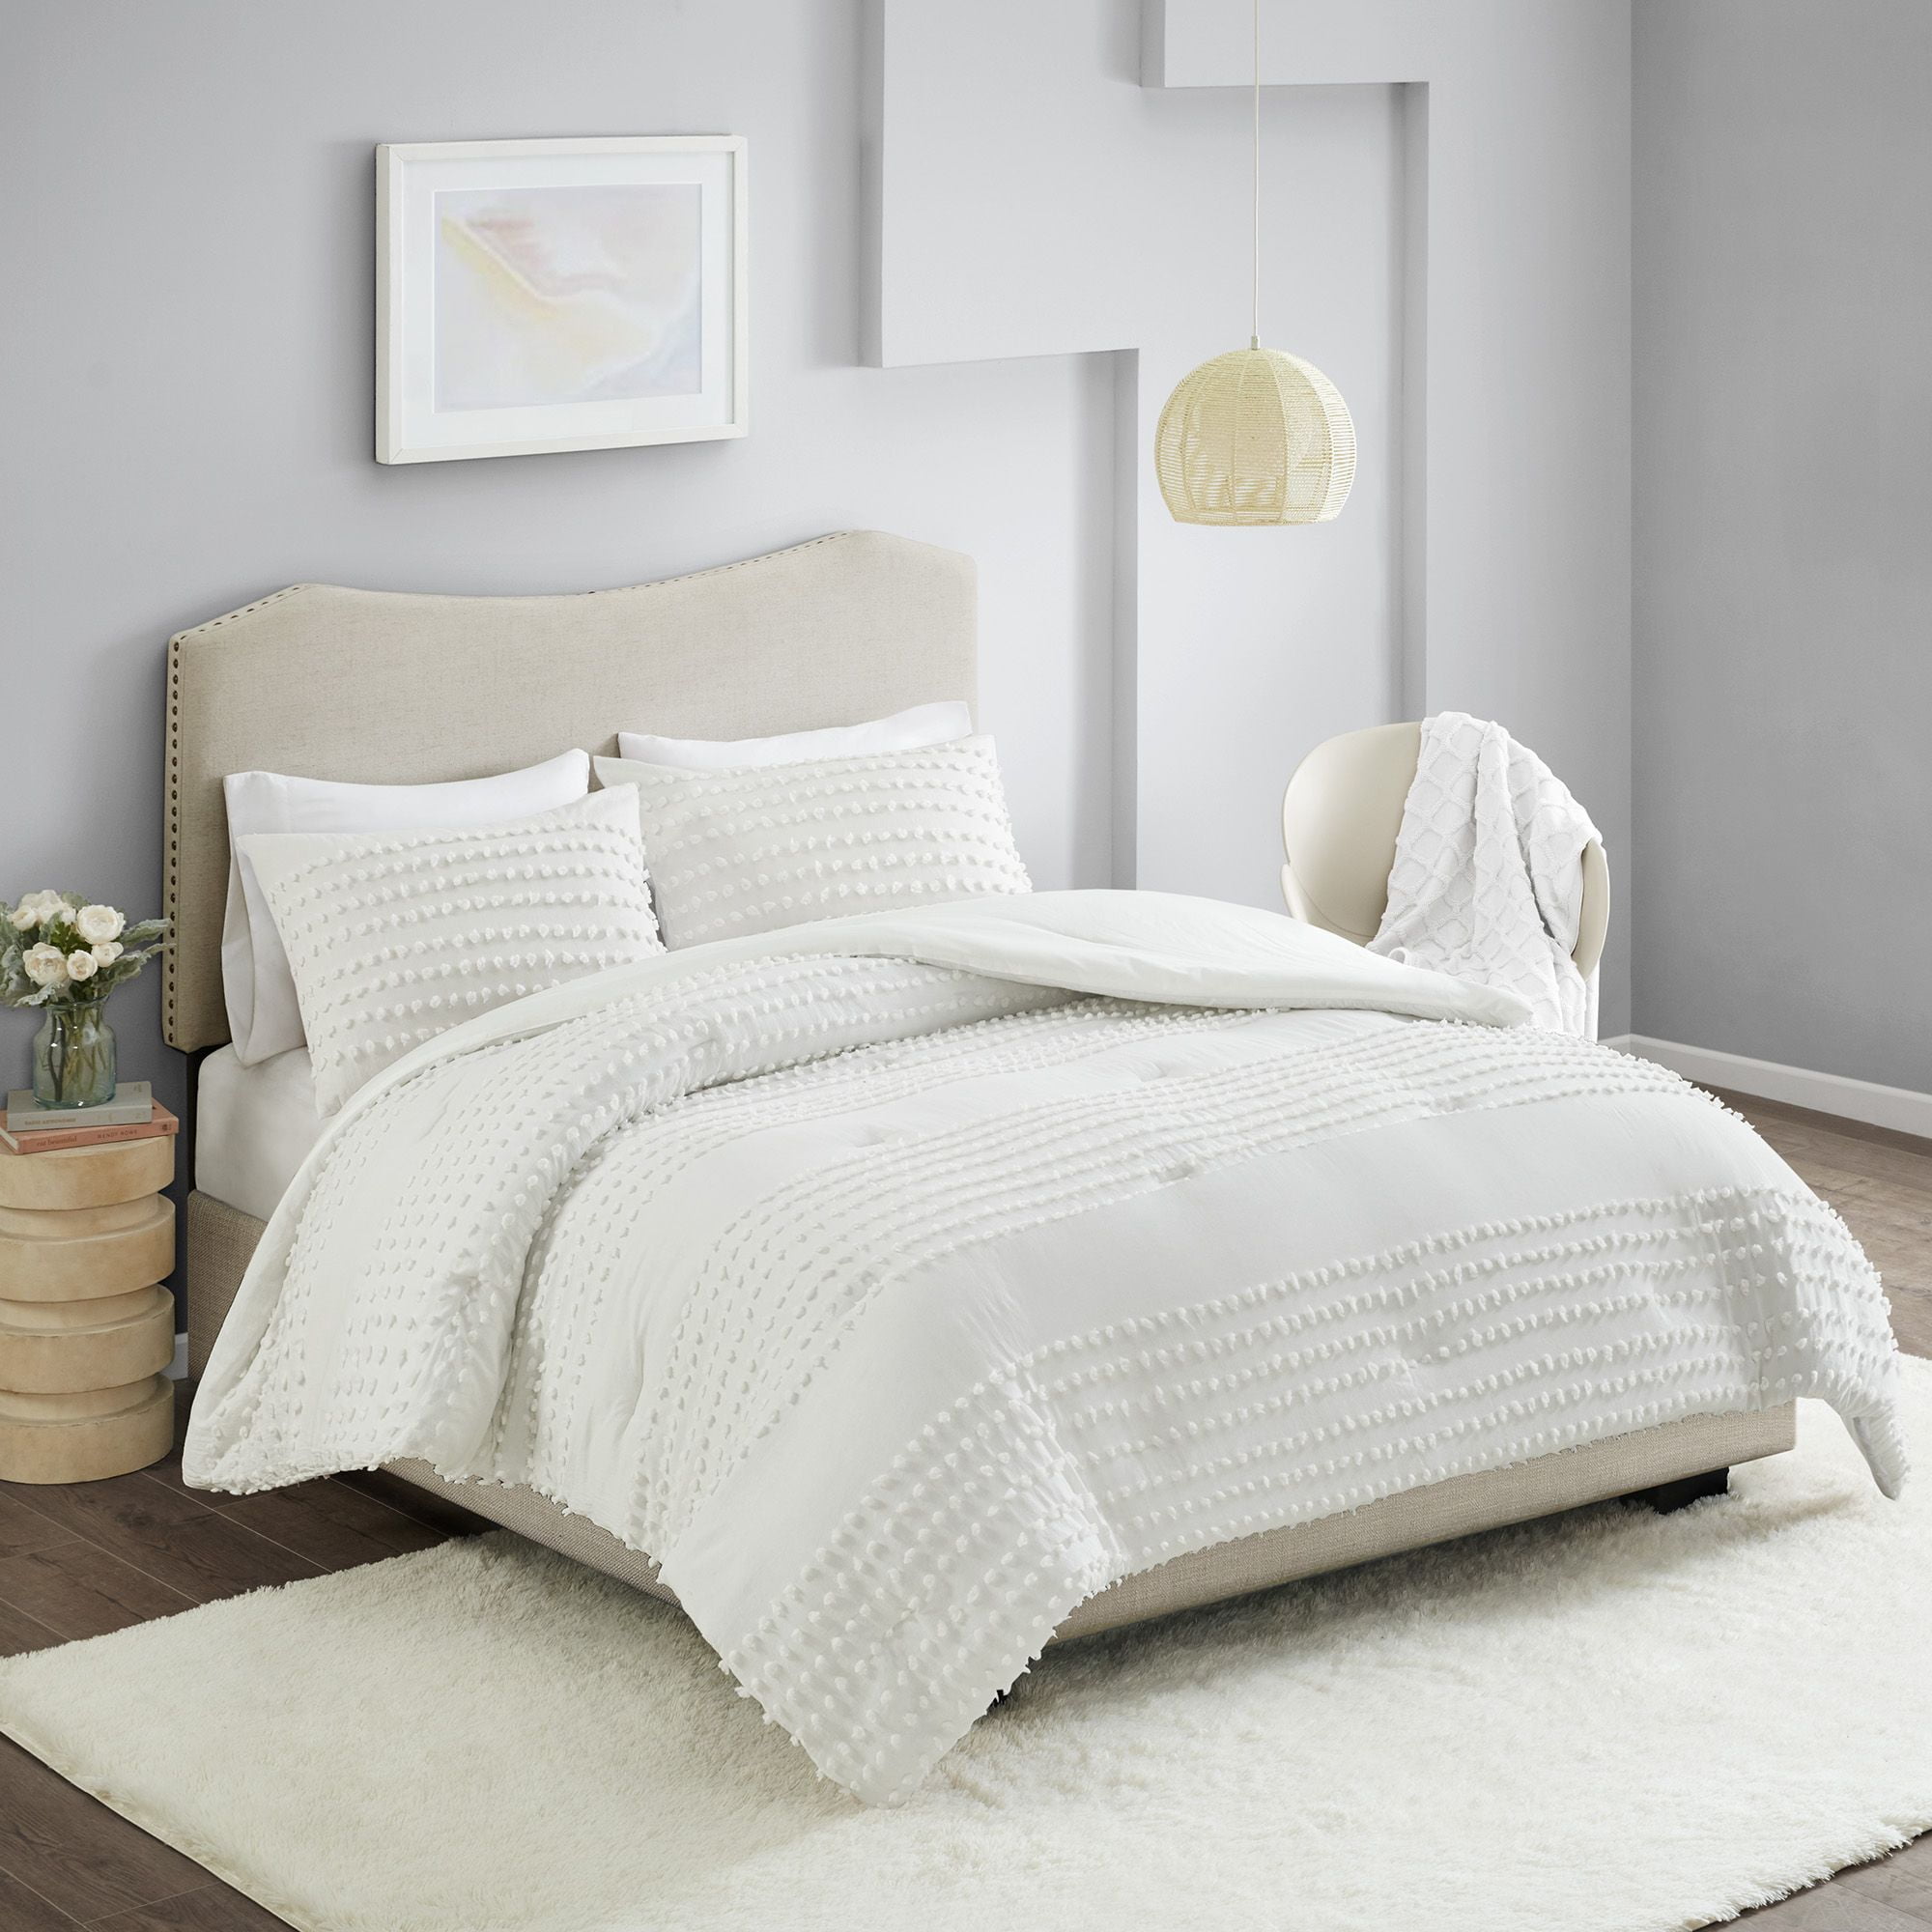 Details about   Comfort Spaces Phillips Comforter Reversible 100% Cotton Face Jacquard Tufted Ch 